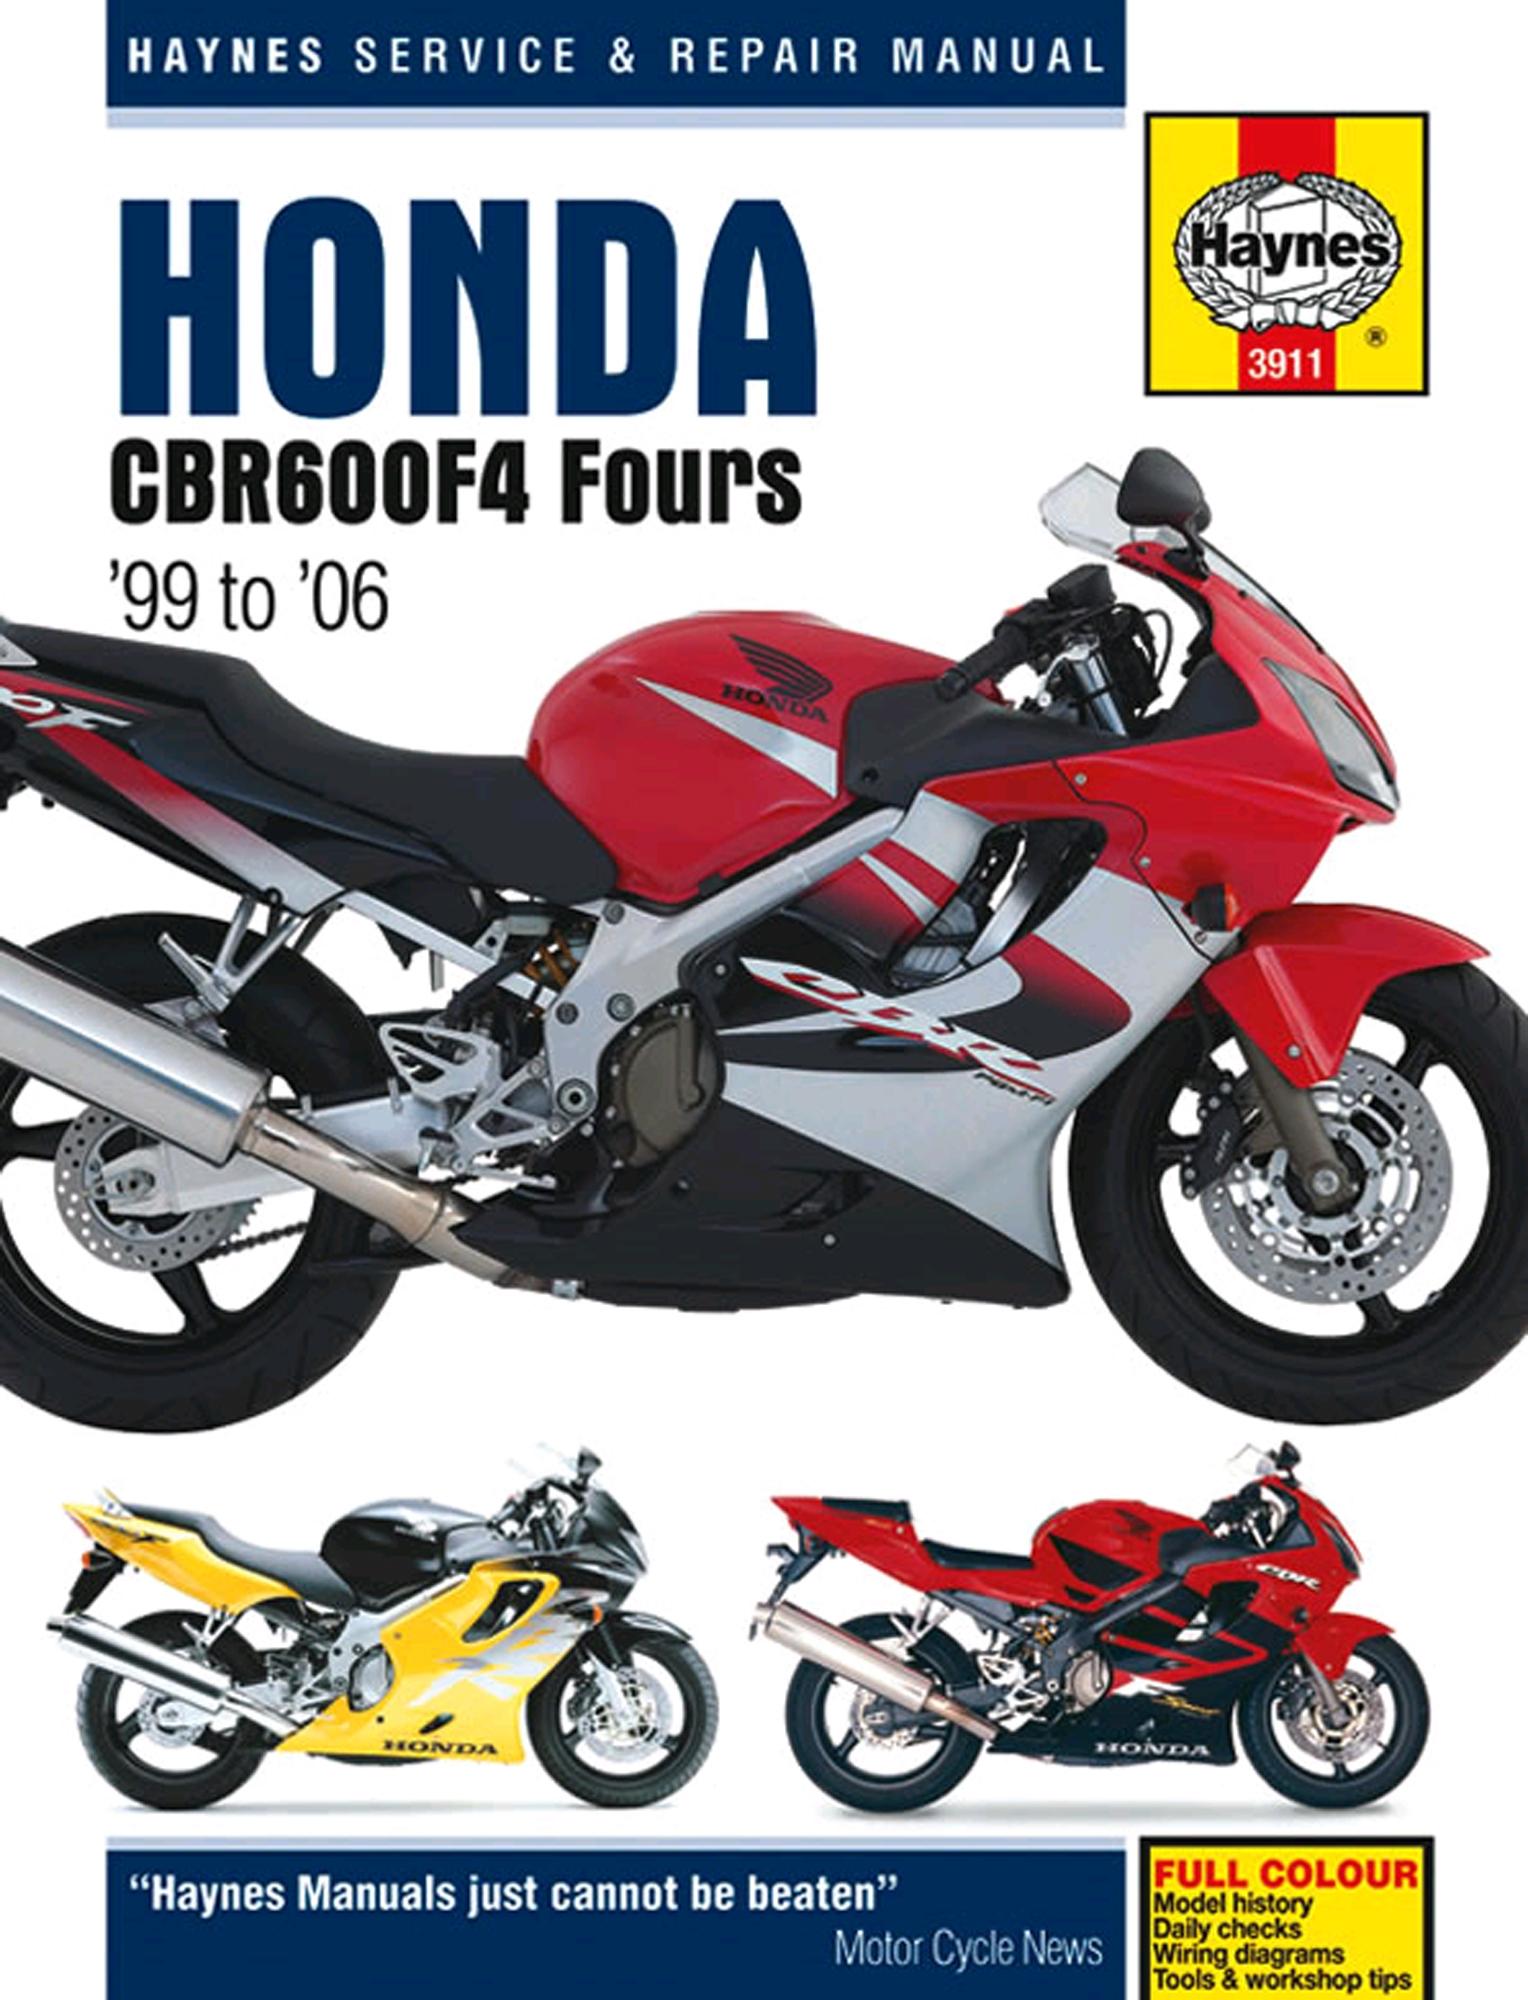 Honda motorcycles ashford #2